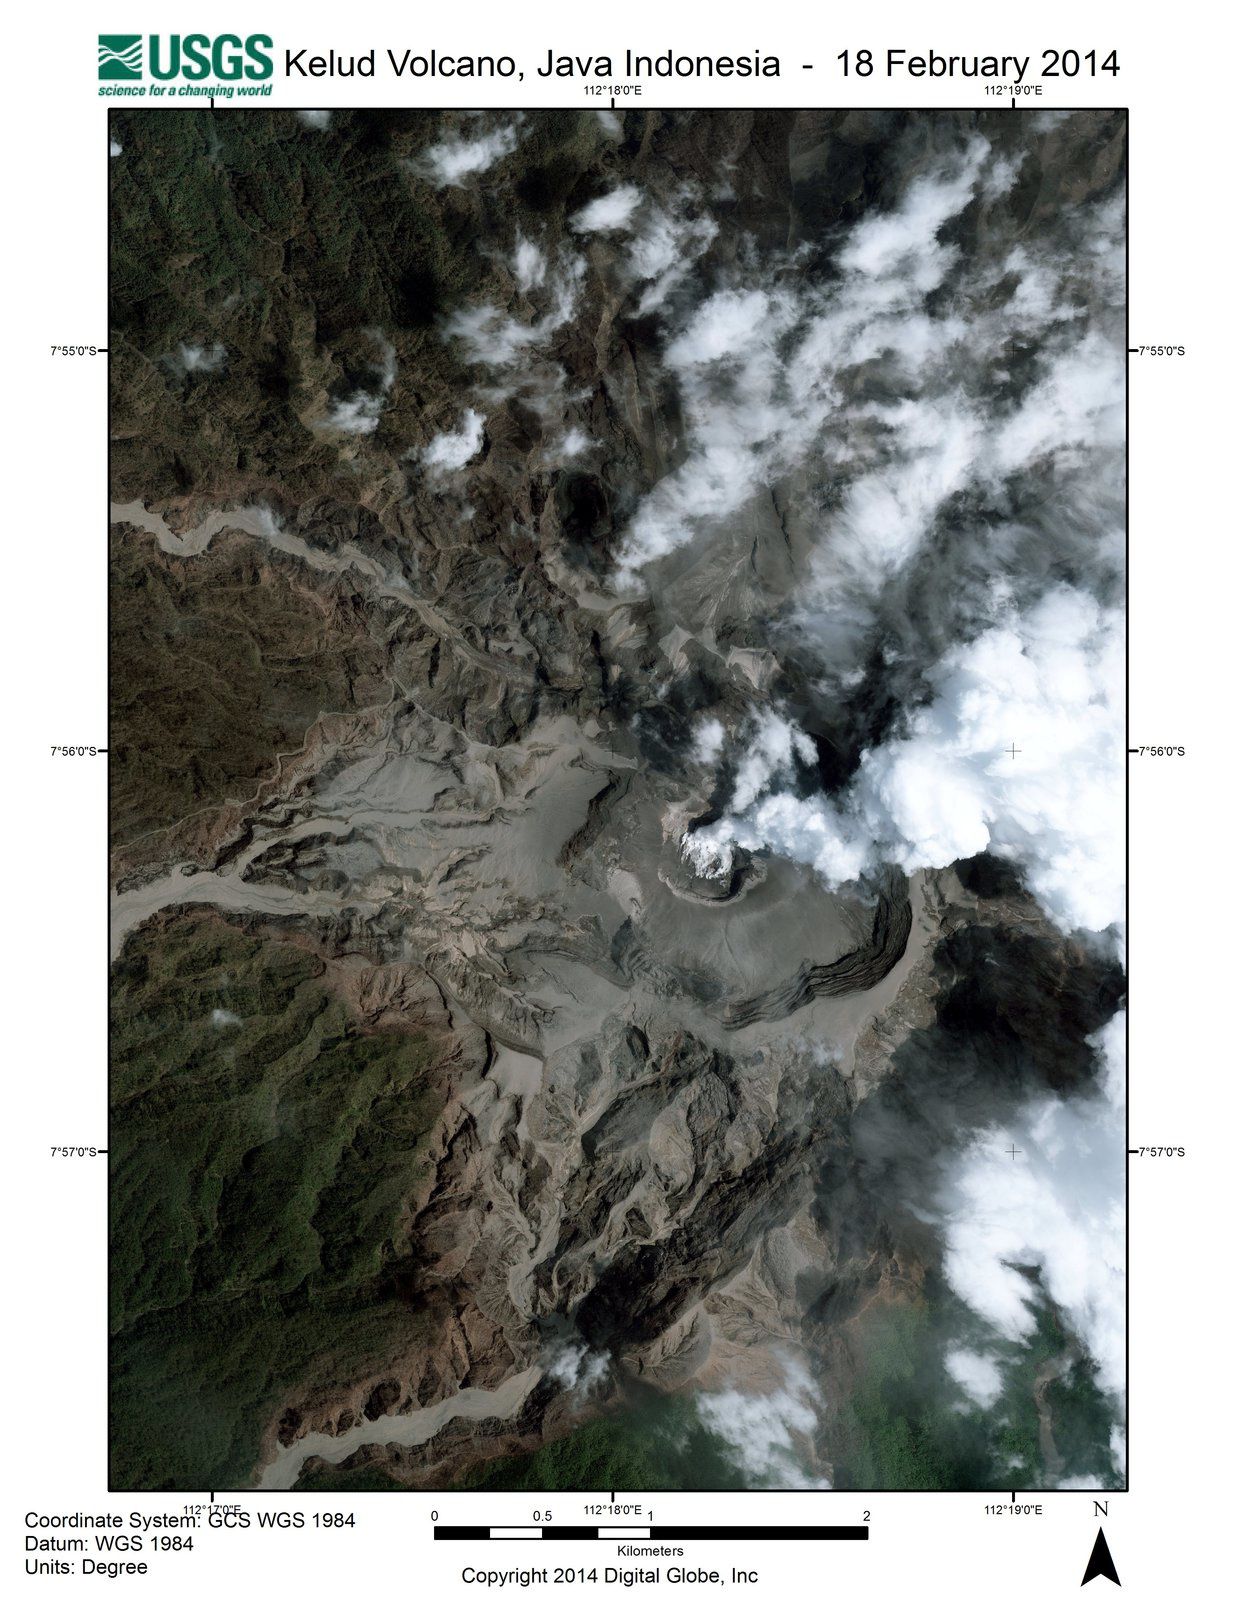 Kelud zone sommitale - image International Charter Space and Major Disasters / USGS - 18.02.2014